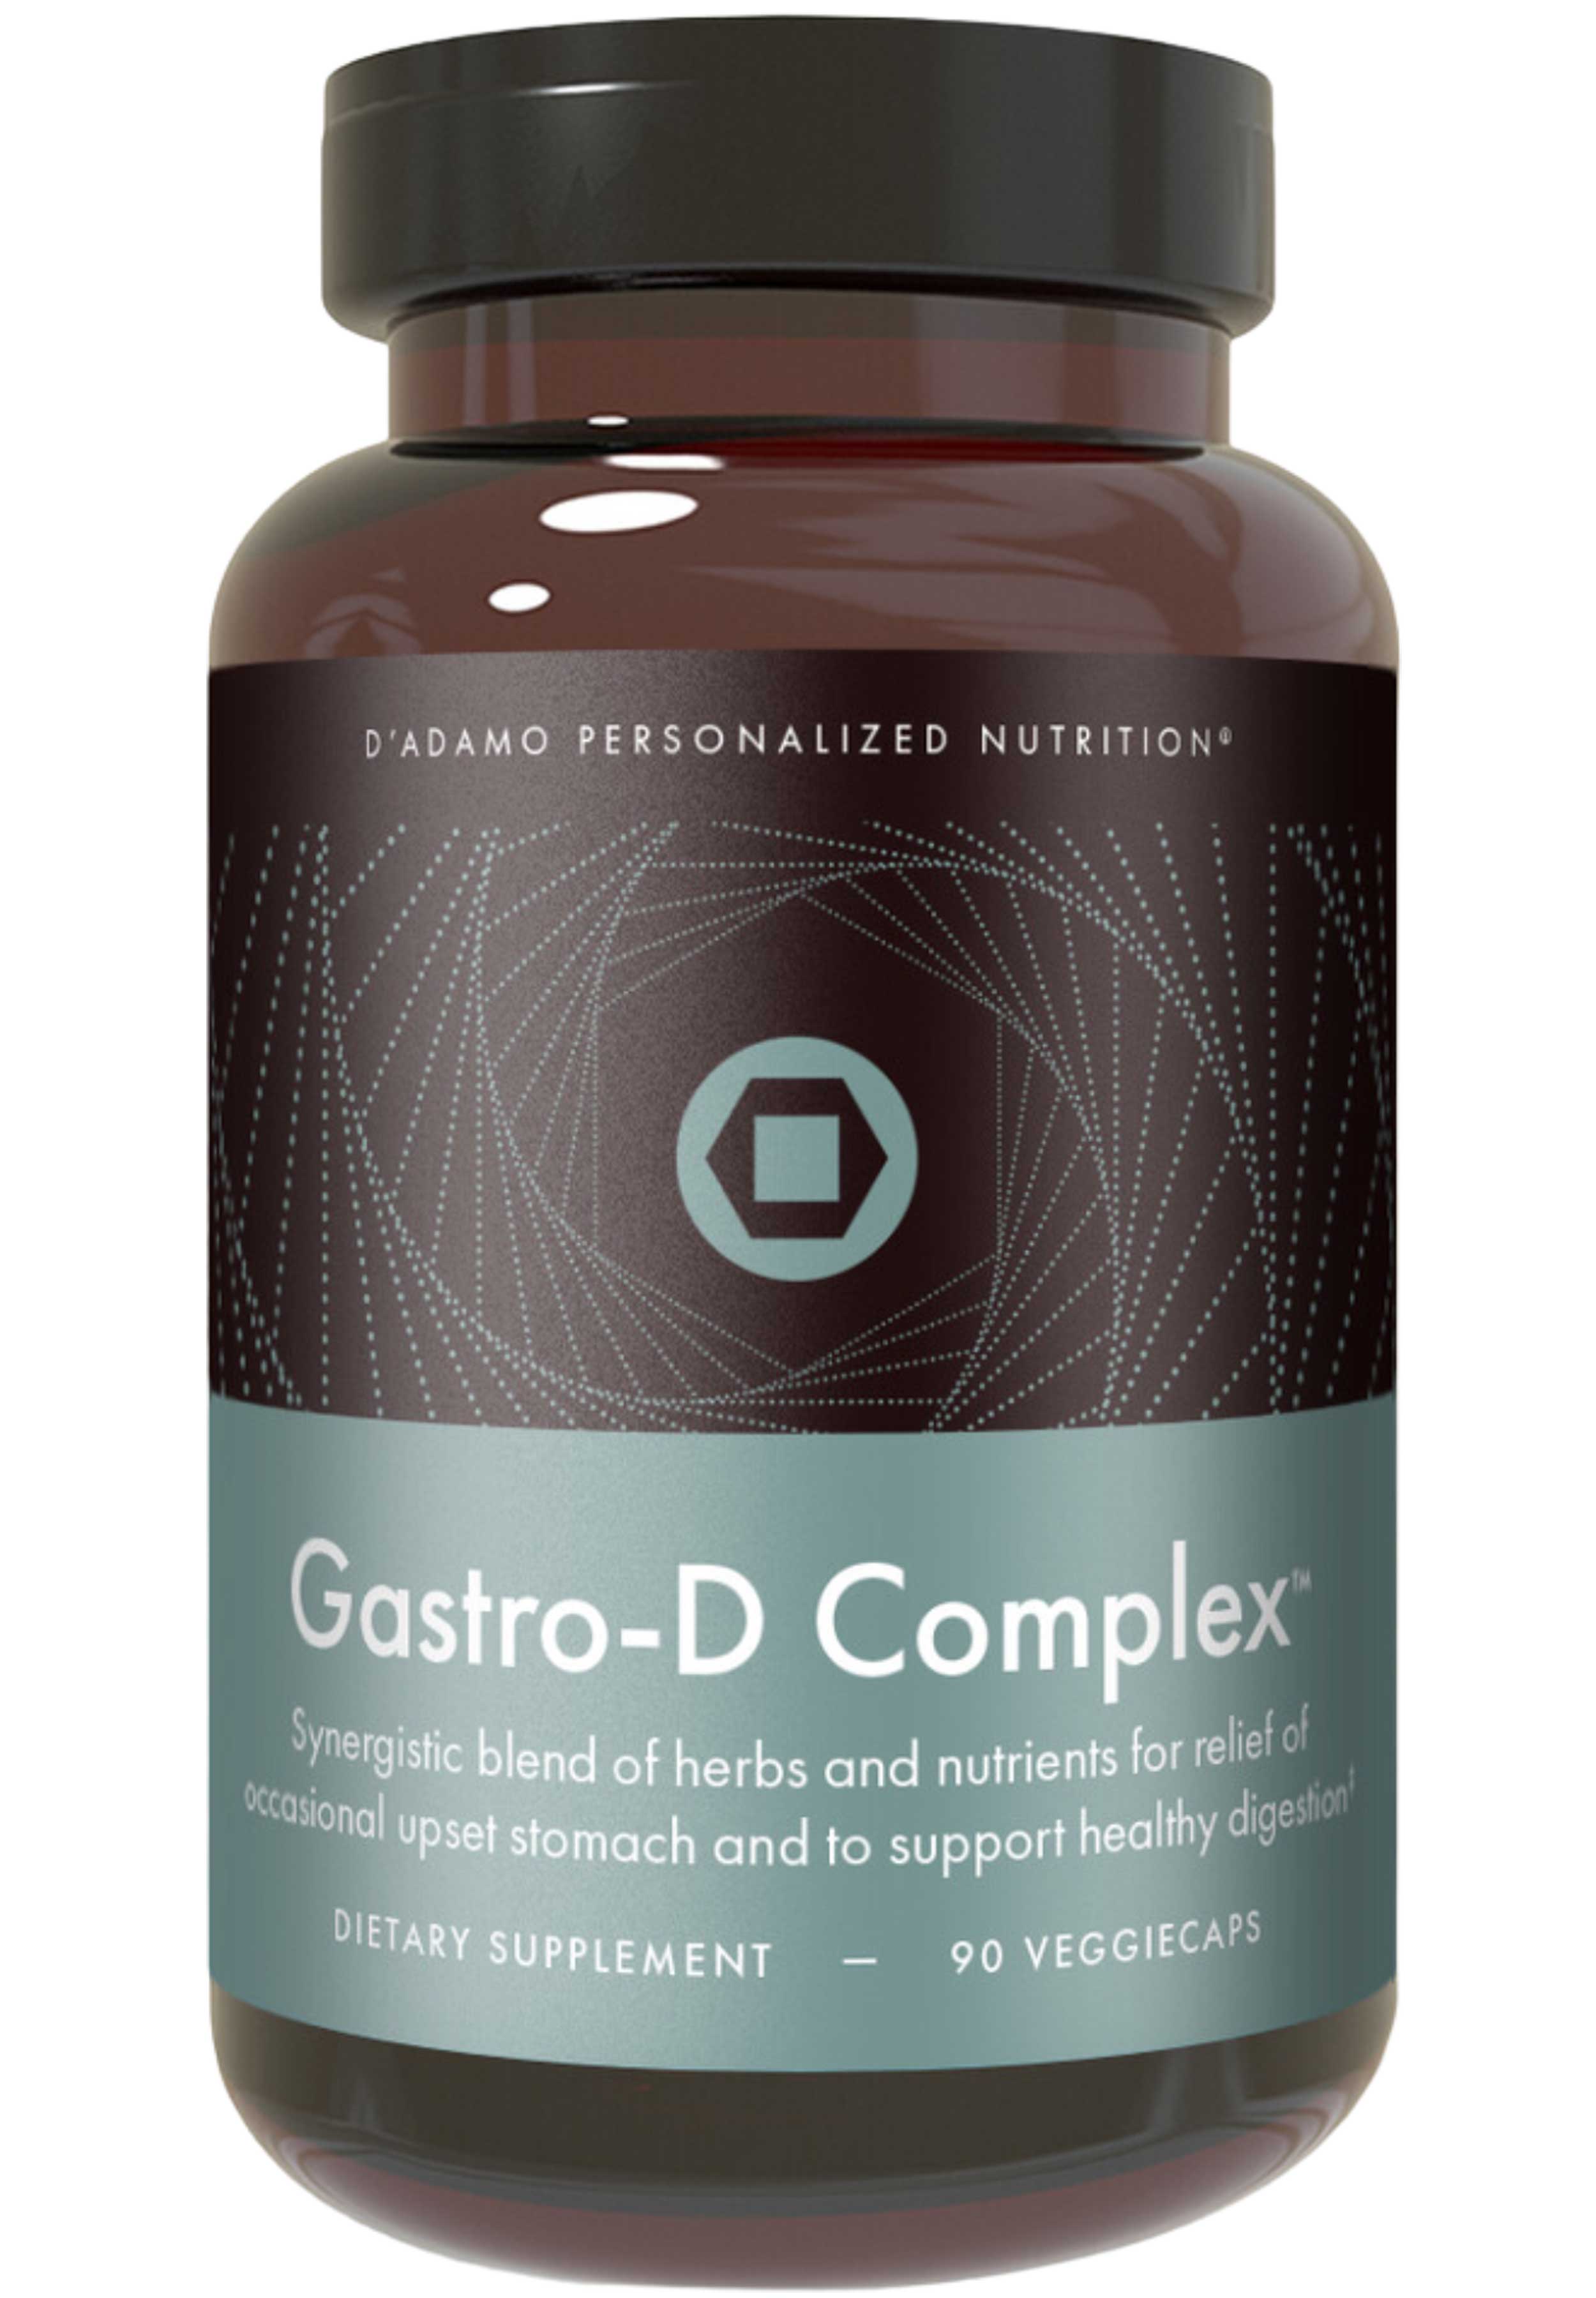 D'Adamo Personalized Nutrition Gastro-D Complex